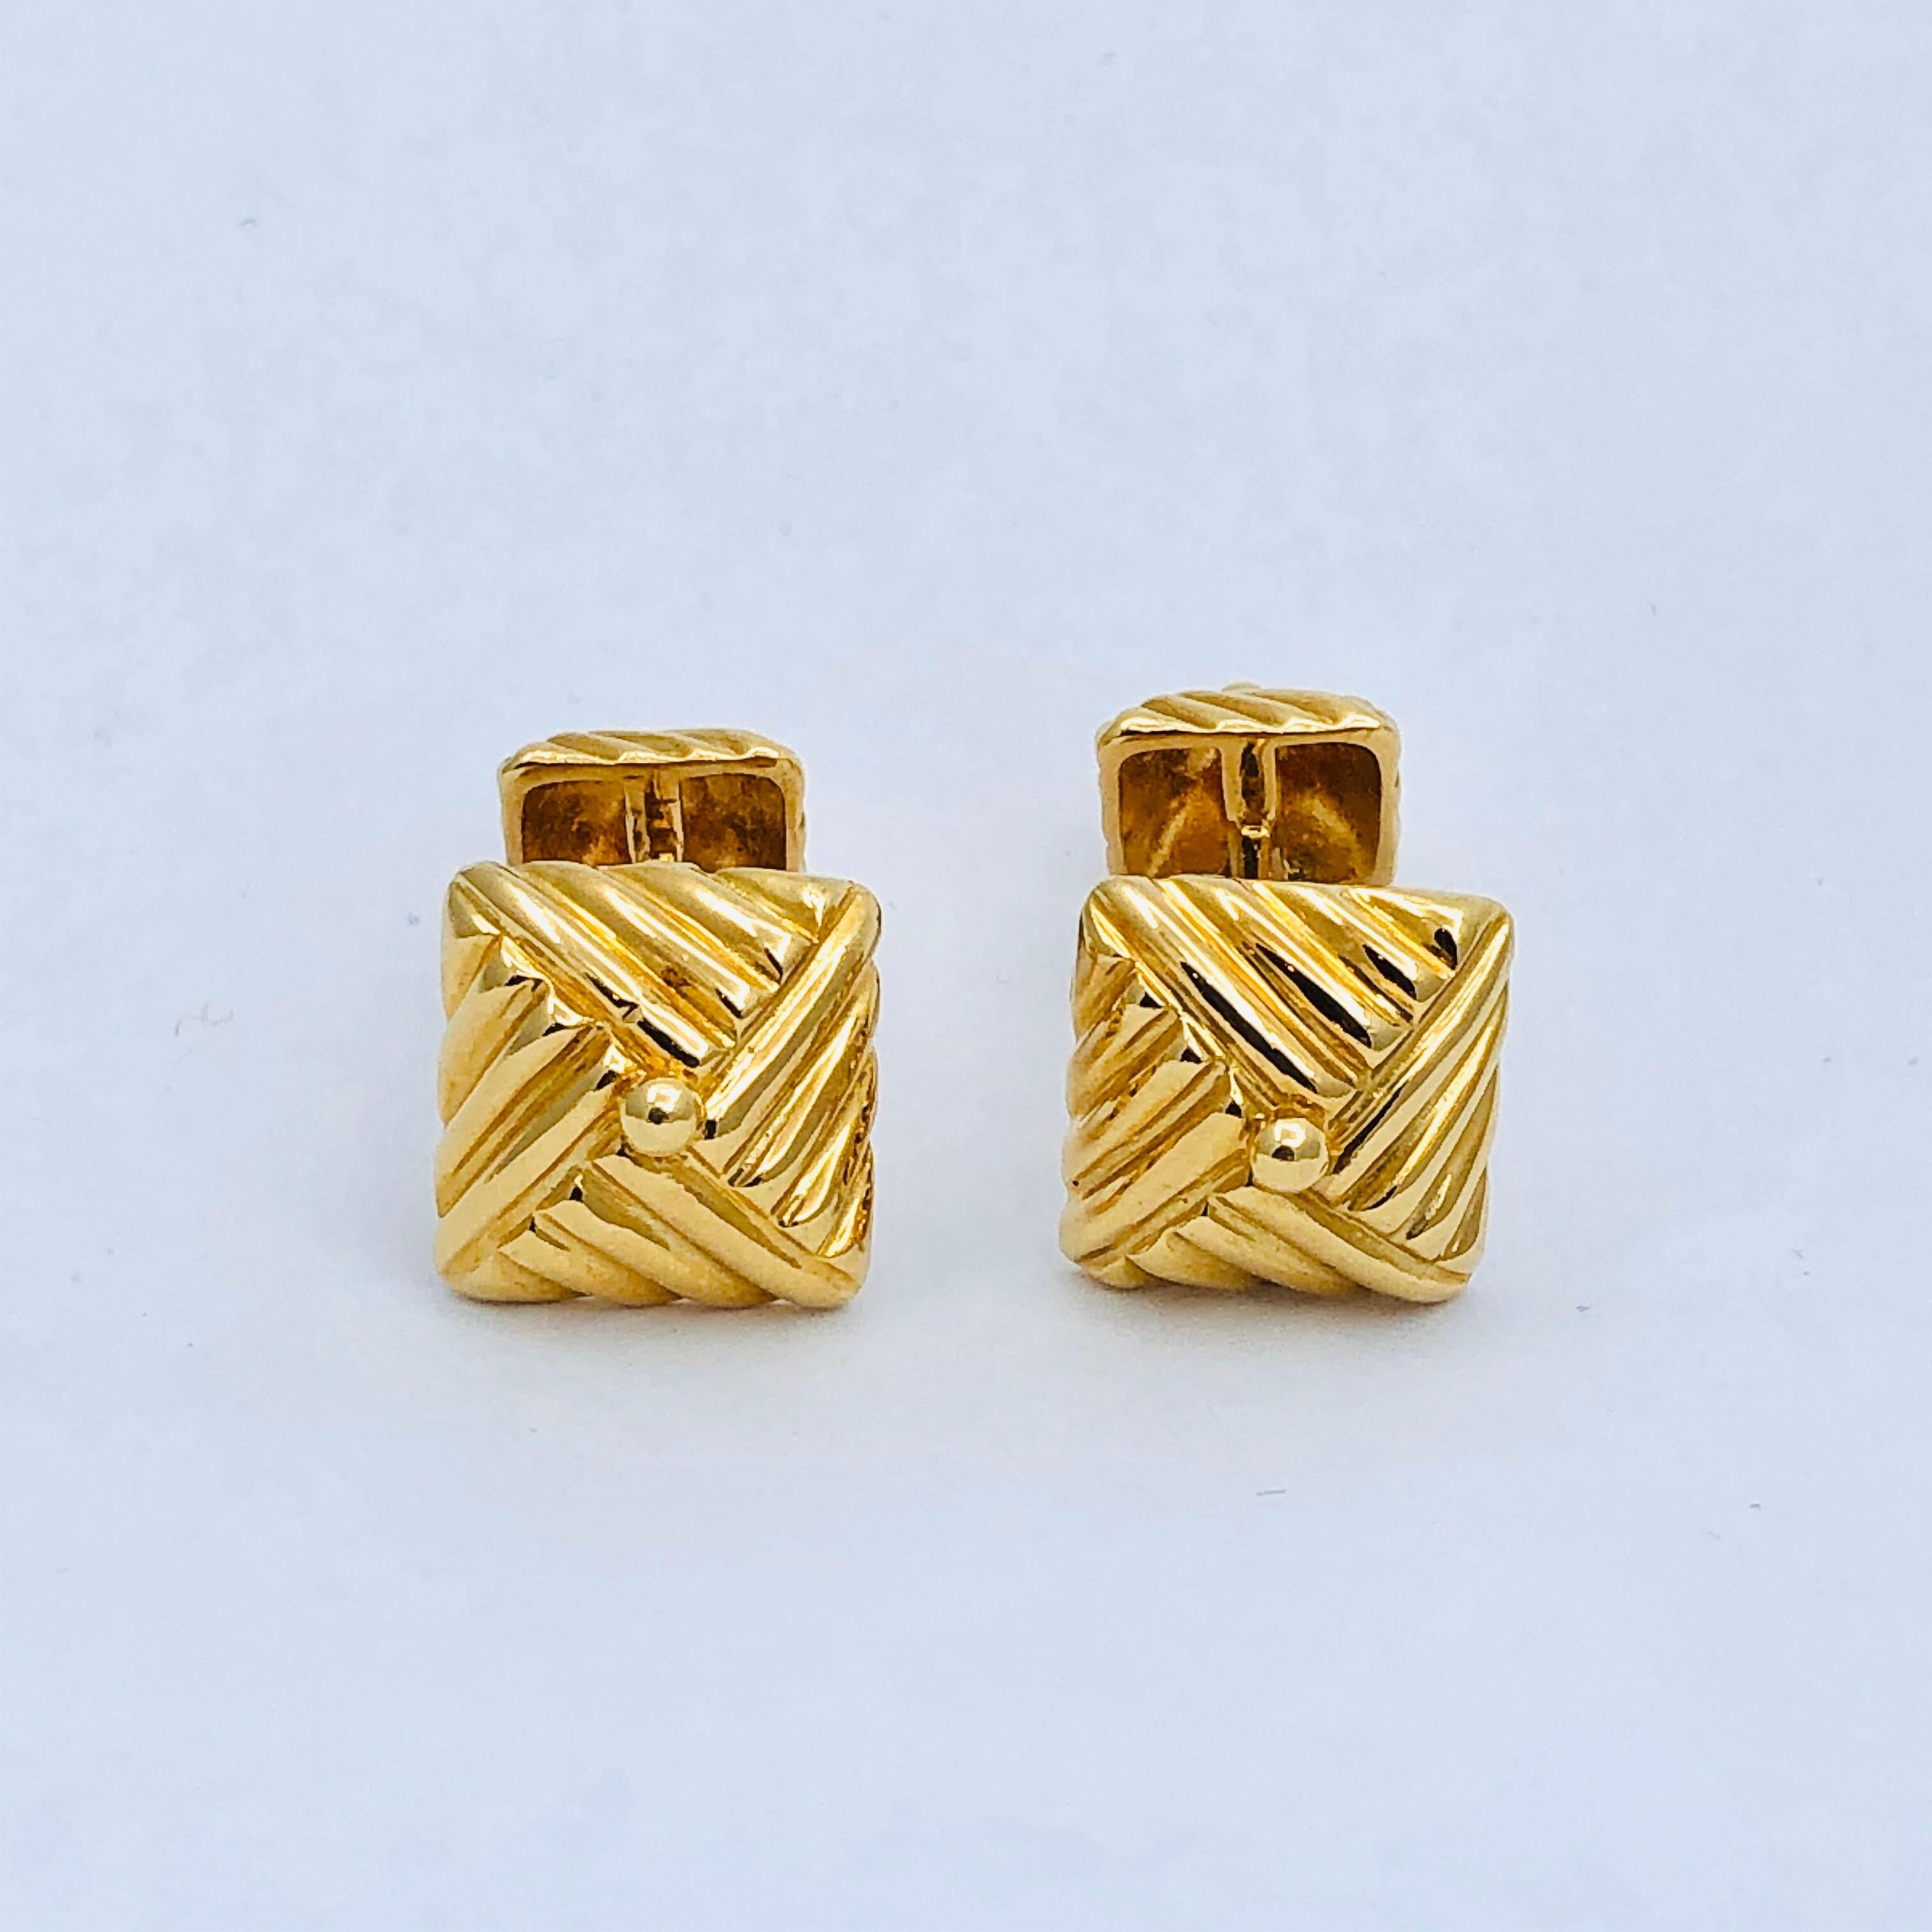 Textured Gold Cufflinks by Emis Beros In Good Condition For Sale In Palm Beach, FL